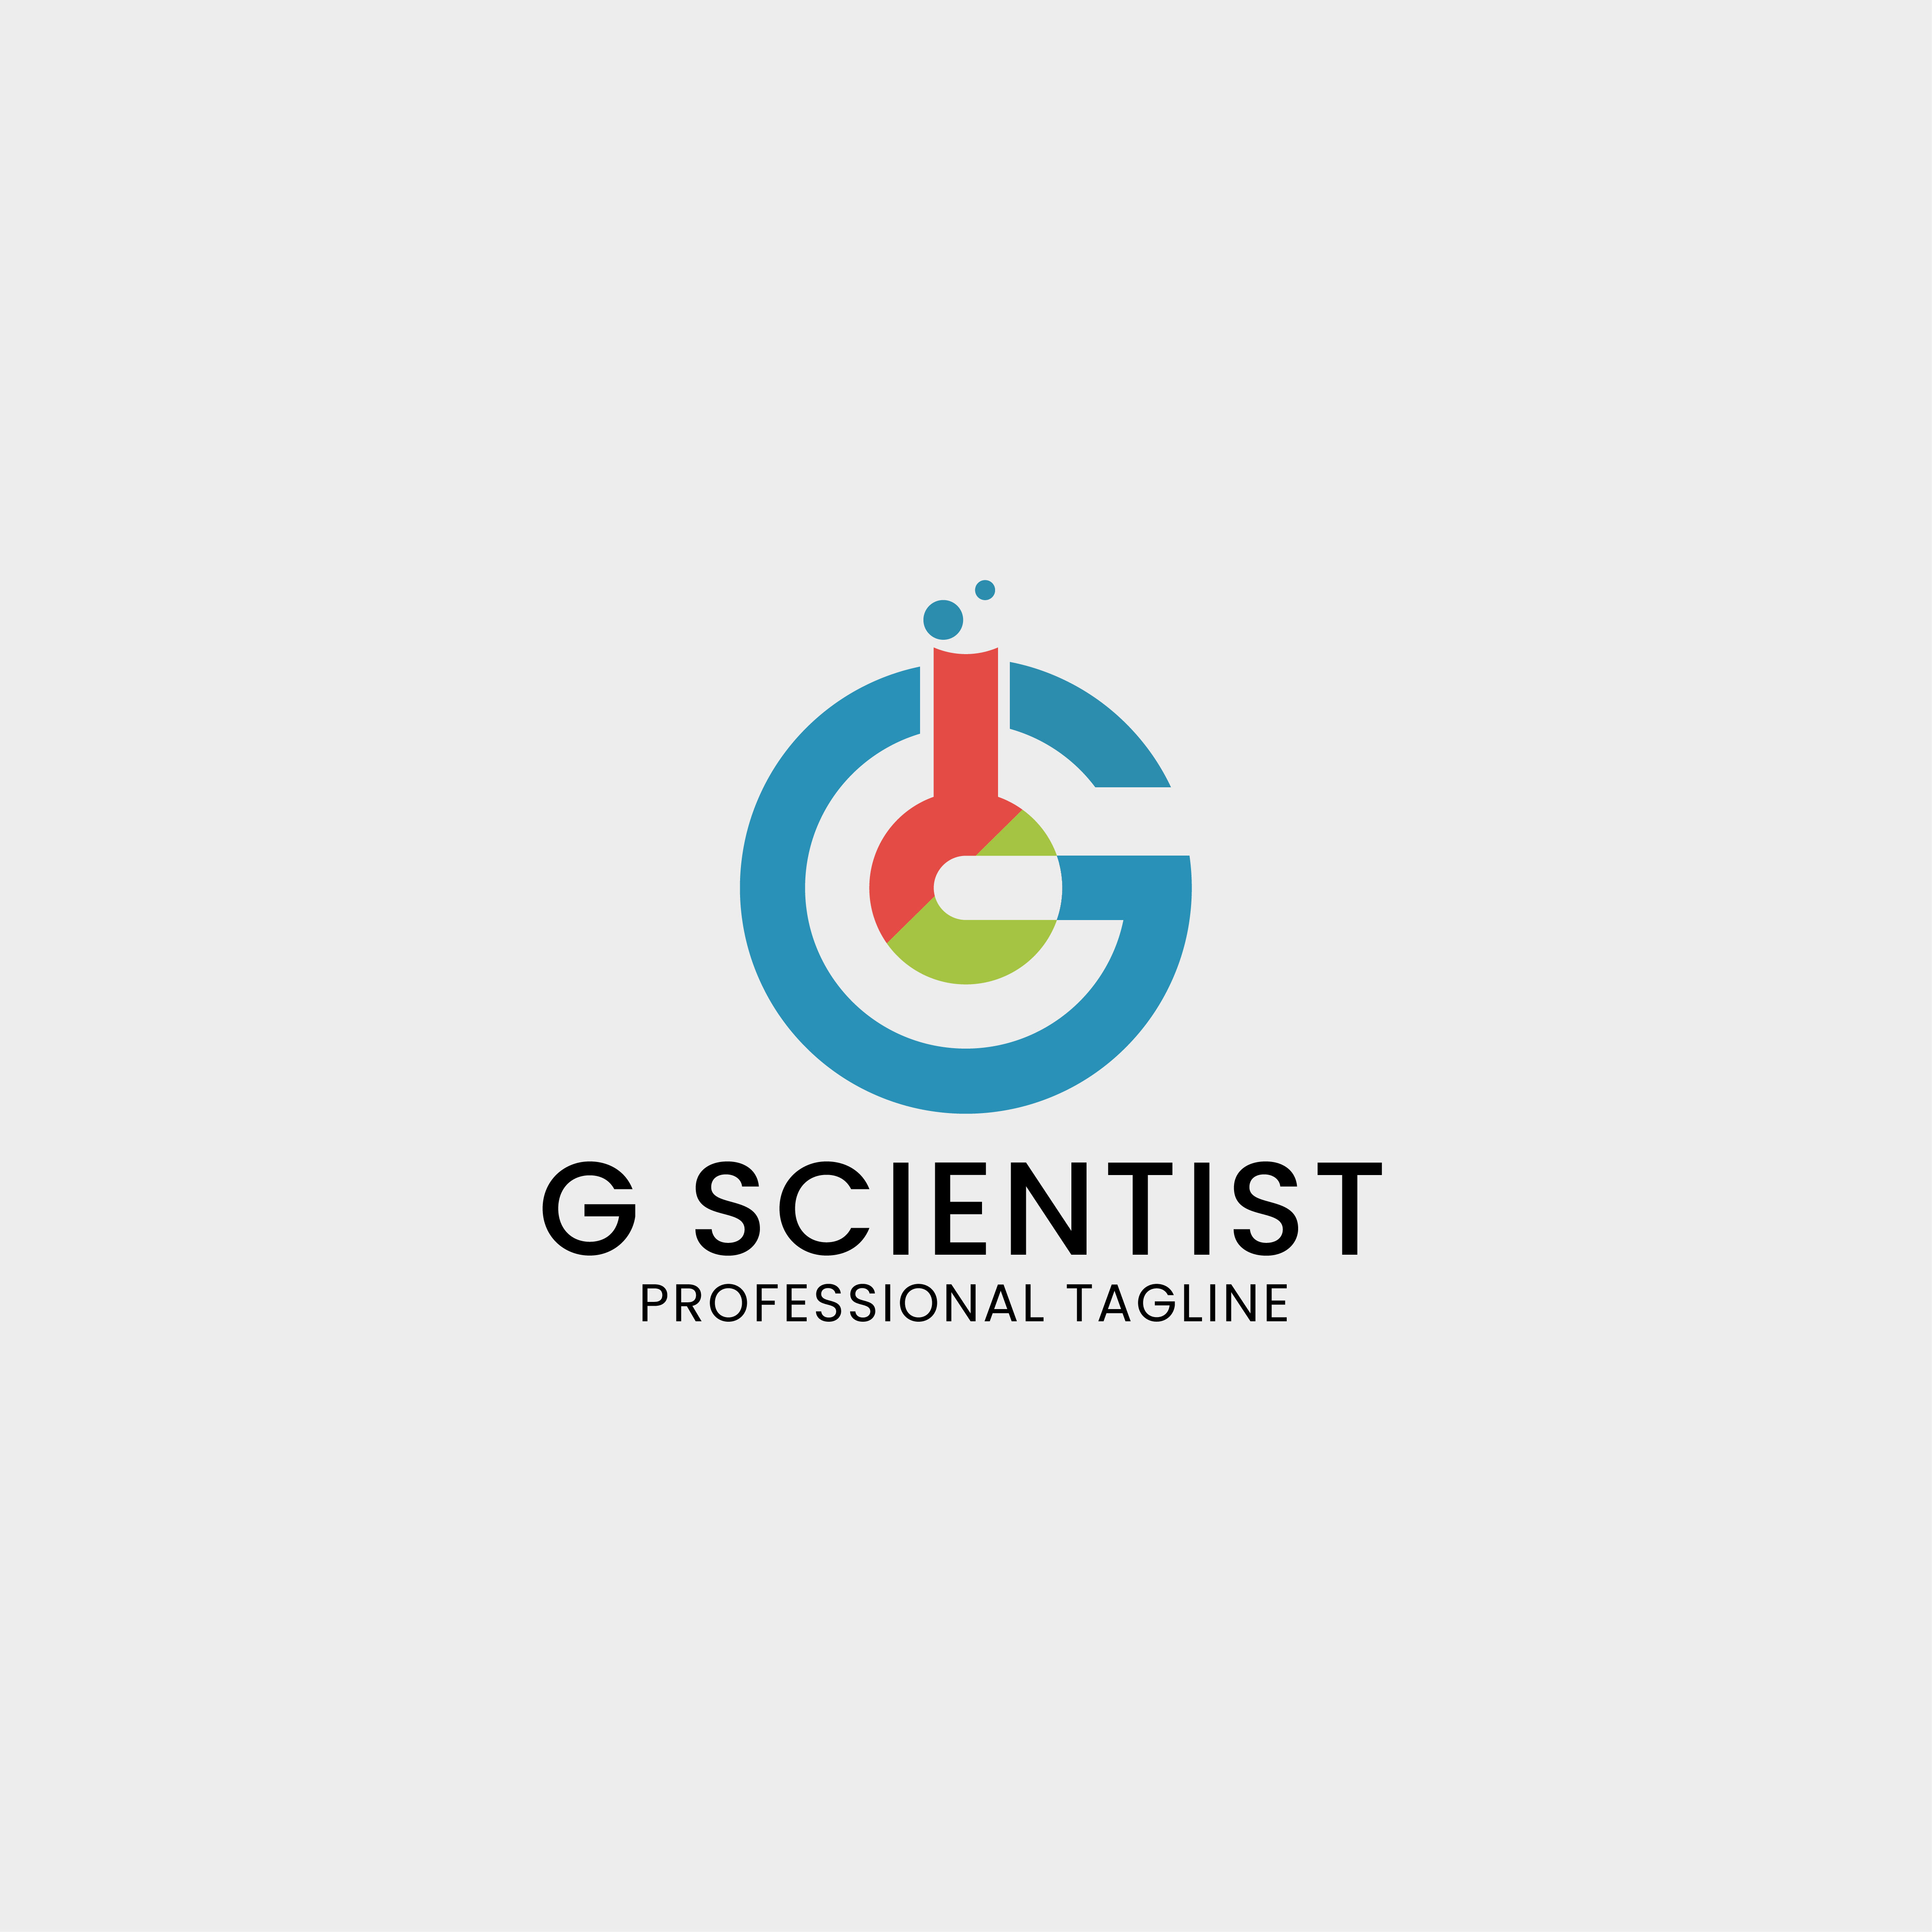 G scientist logo design cover image.